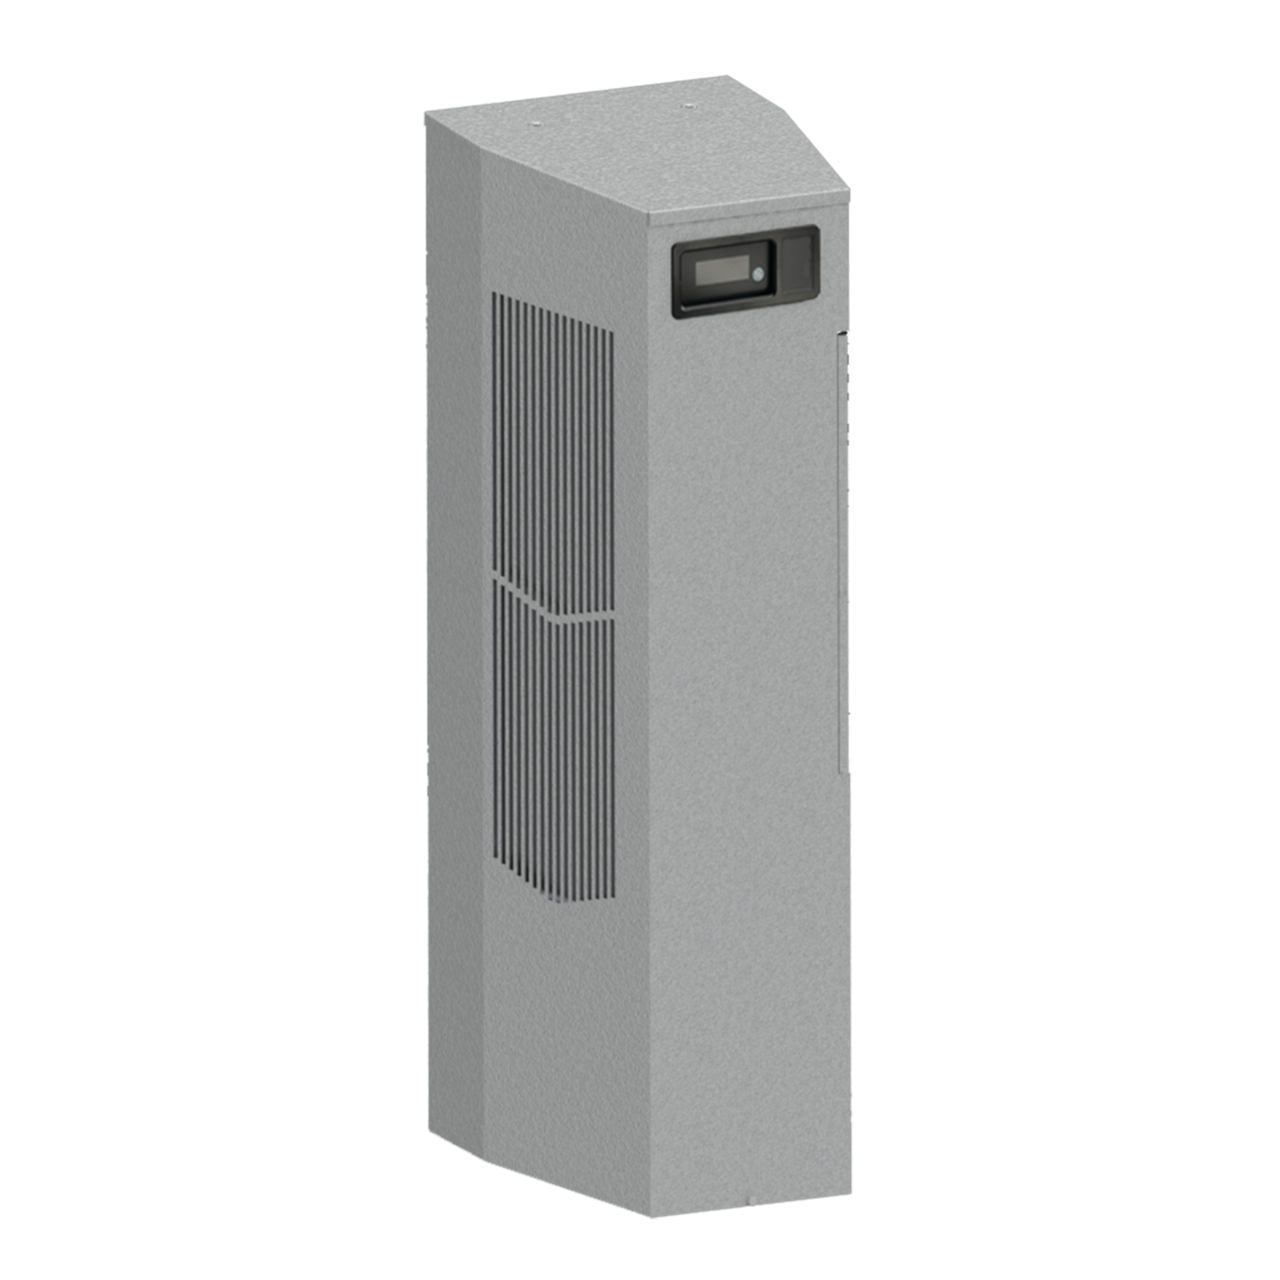 nVent HOFFMAN Spectracool™ N360846G150 MCL Indoor/Outdoor Enclosure Air Conditioner, 460 VAC, 2.9/3 A, 50/60 Hz, NEMA 3R/4/12 Enclosure, 8500 Btu/hr